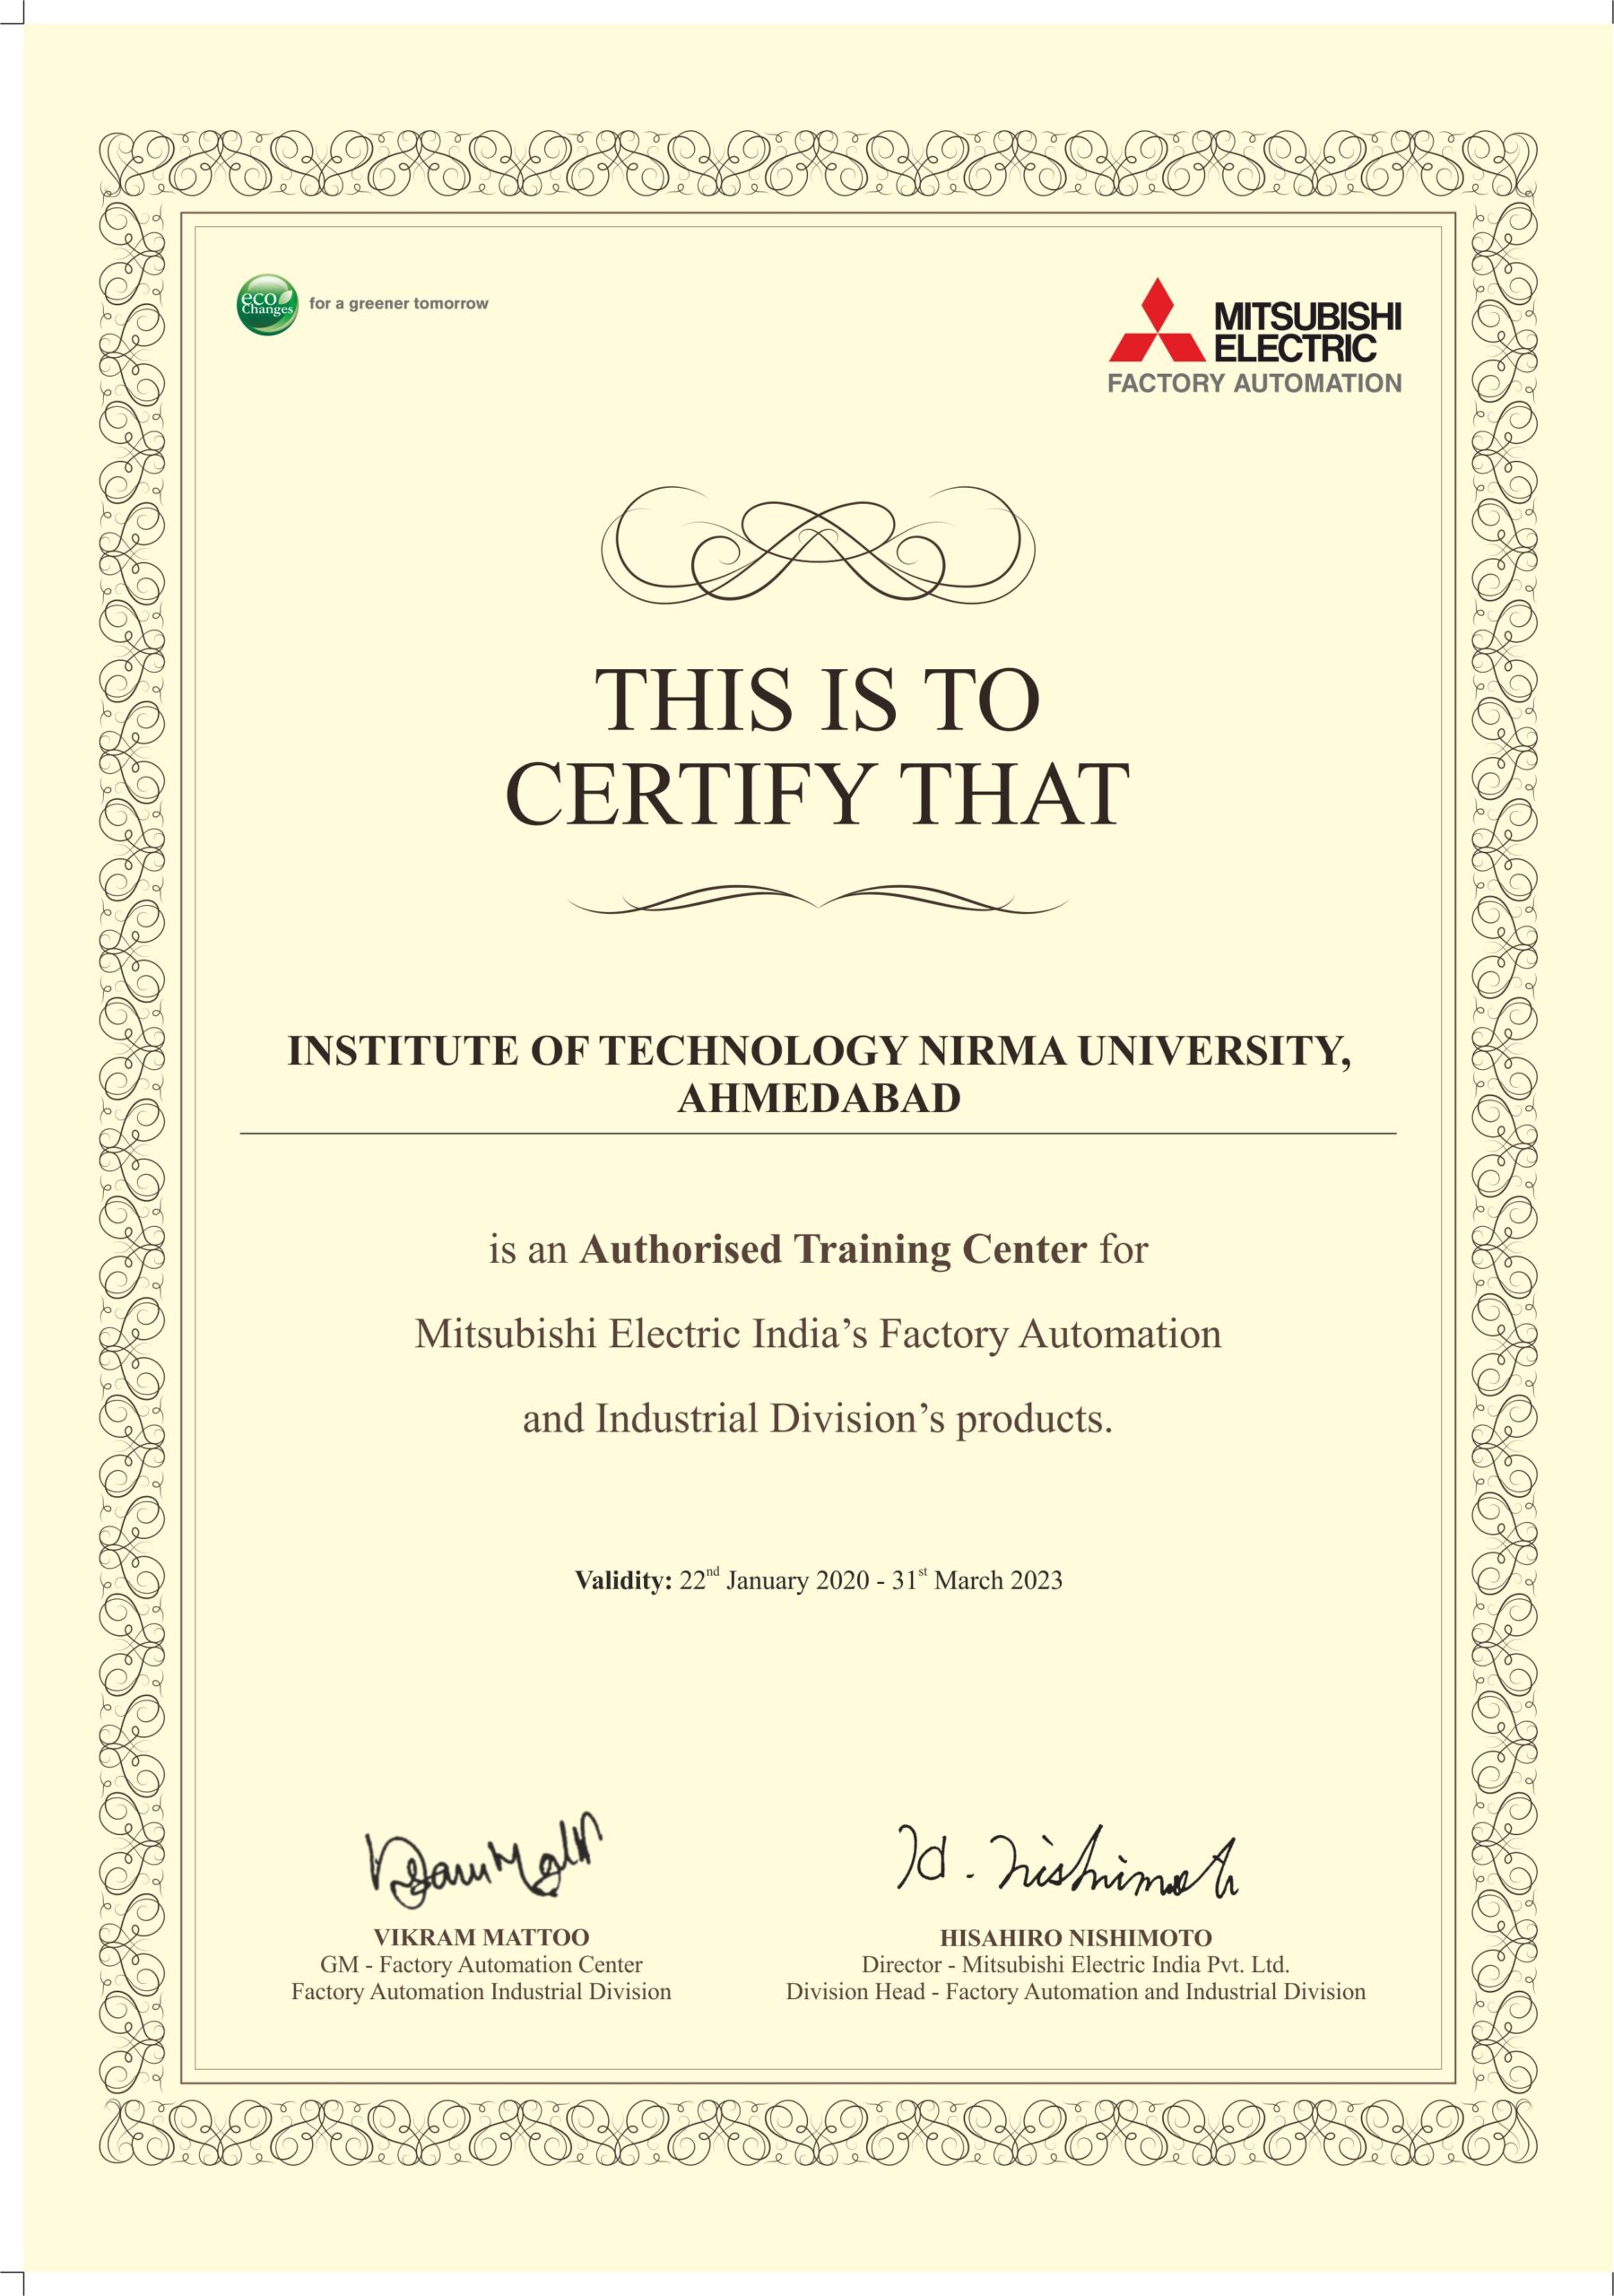 The Authorised Training Center for Mitsubishi Electric India Pvt. Ltd.